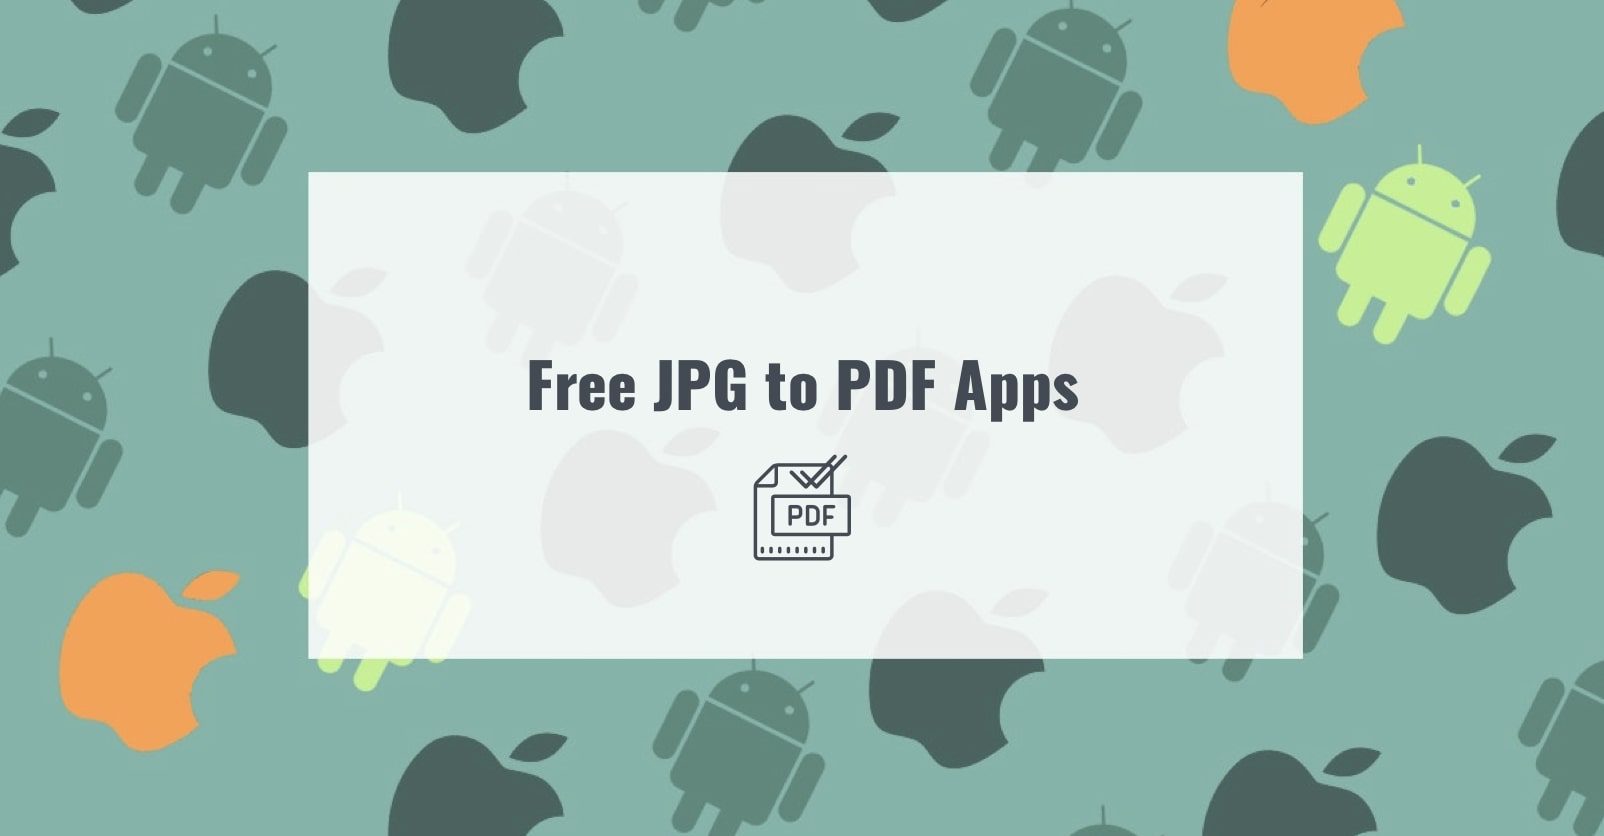 Free JPG to PDF Apps